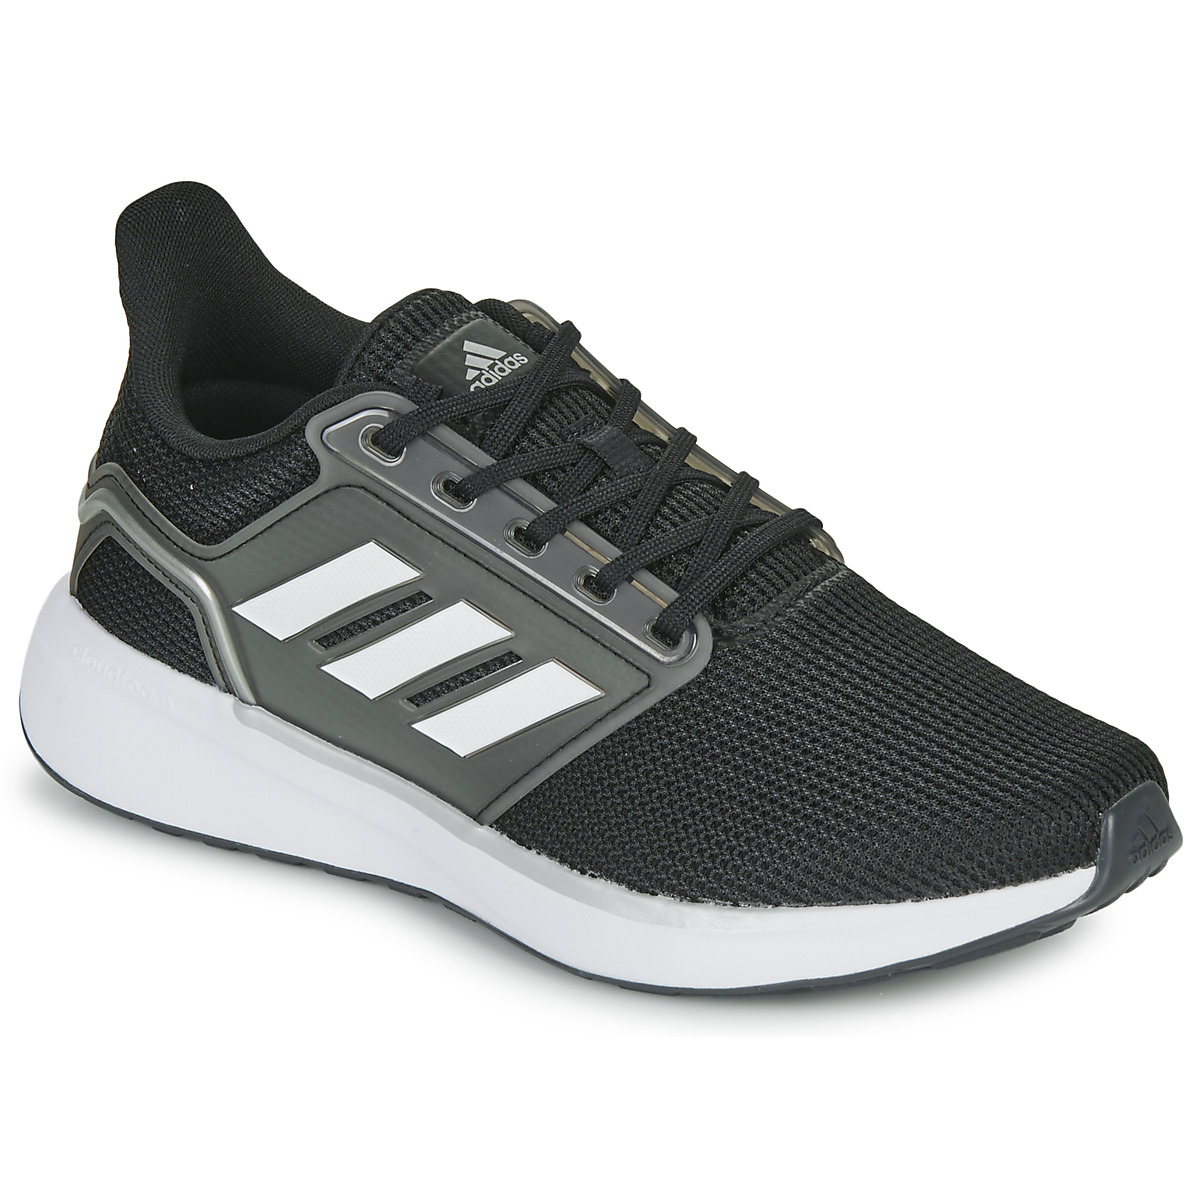 Chaussures de running adidas plains Performance EQ19 RUN W 24286457 1200 A